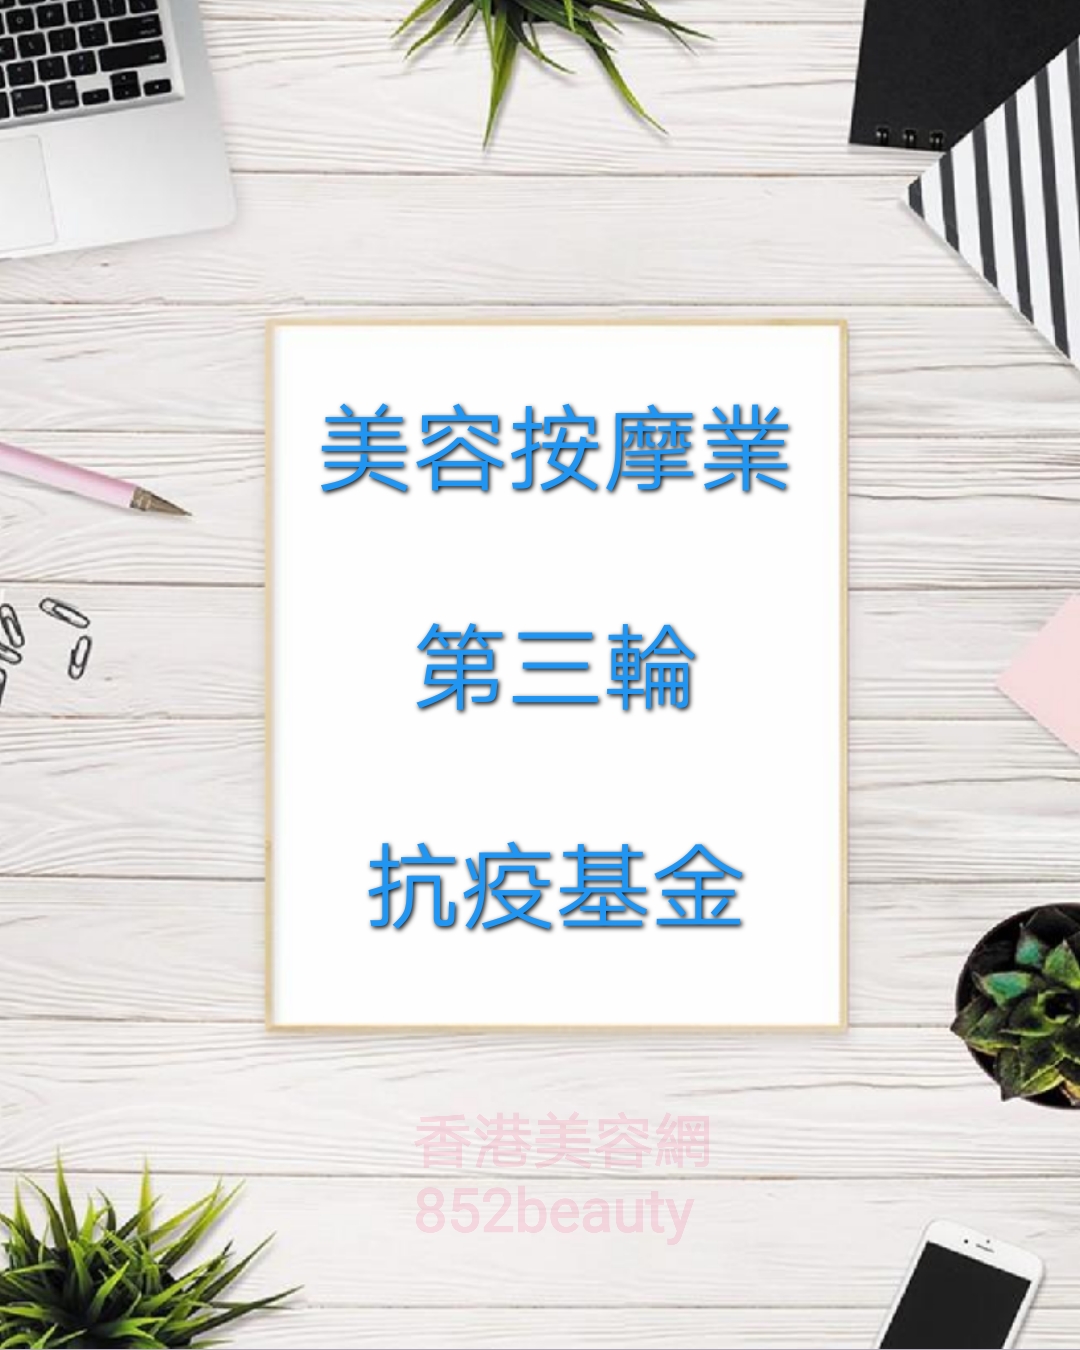 Hong Kong Beauty Salon Latest Beauty News: 第三輪防疫抗疫基金「美容院、按摩院及派對房間資助計劃」